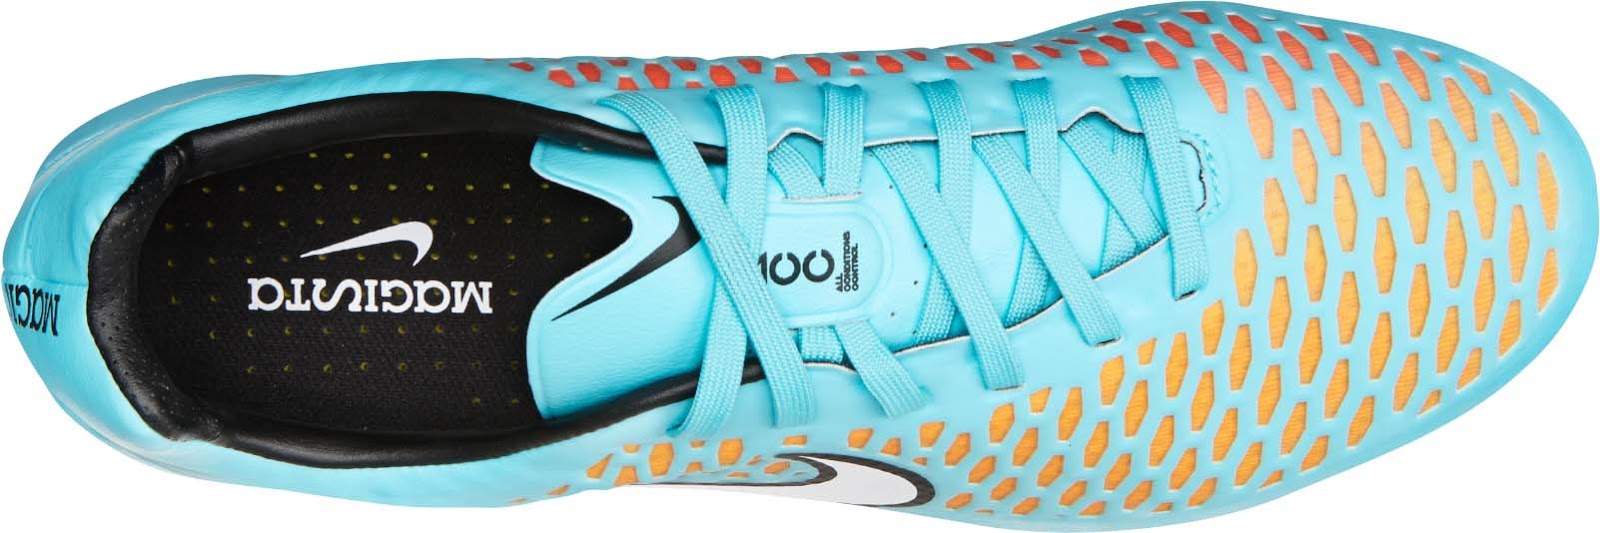 Nike Magista ONDA IC Indoor Soccer Shoes (9.5) Turquoise